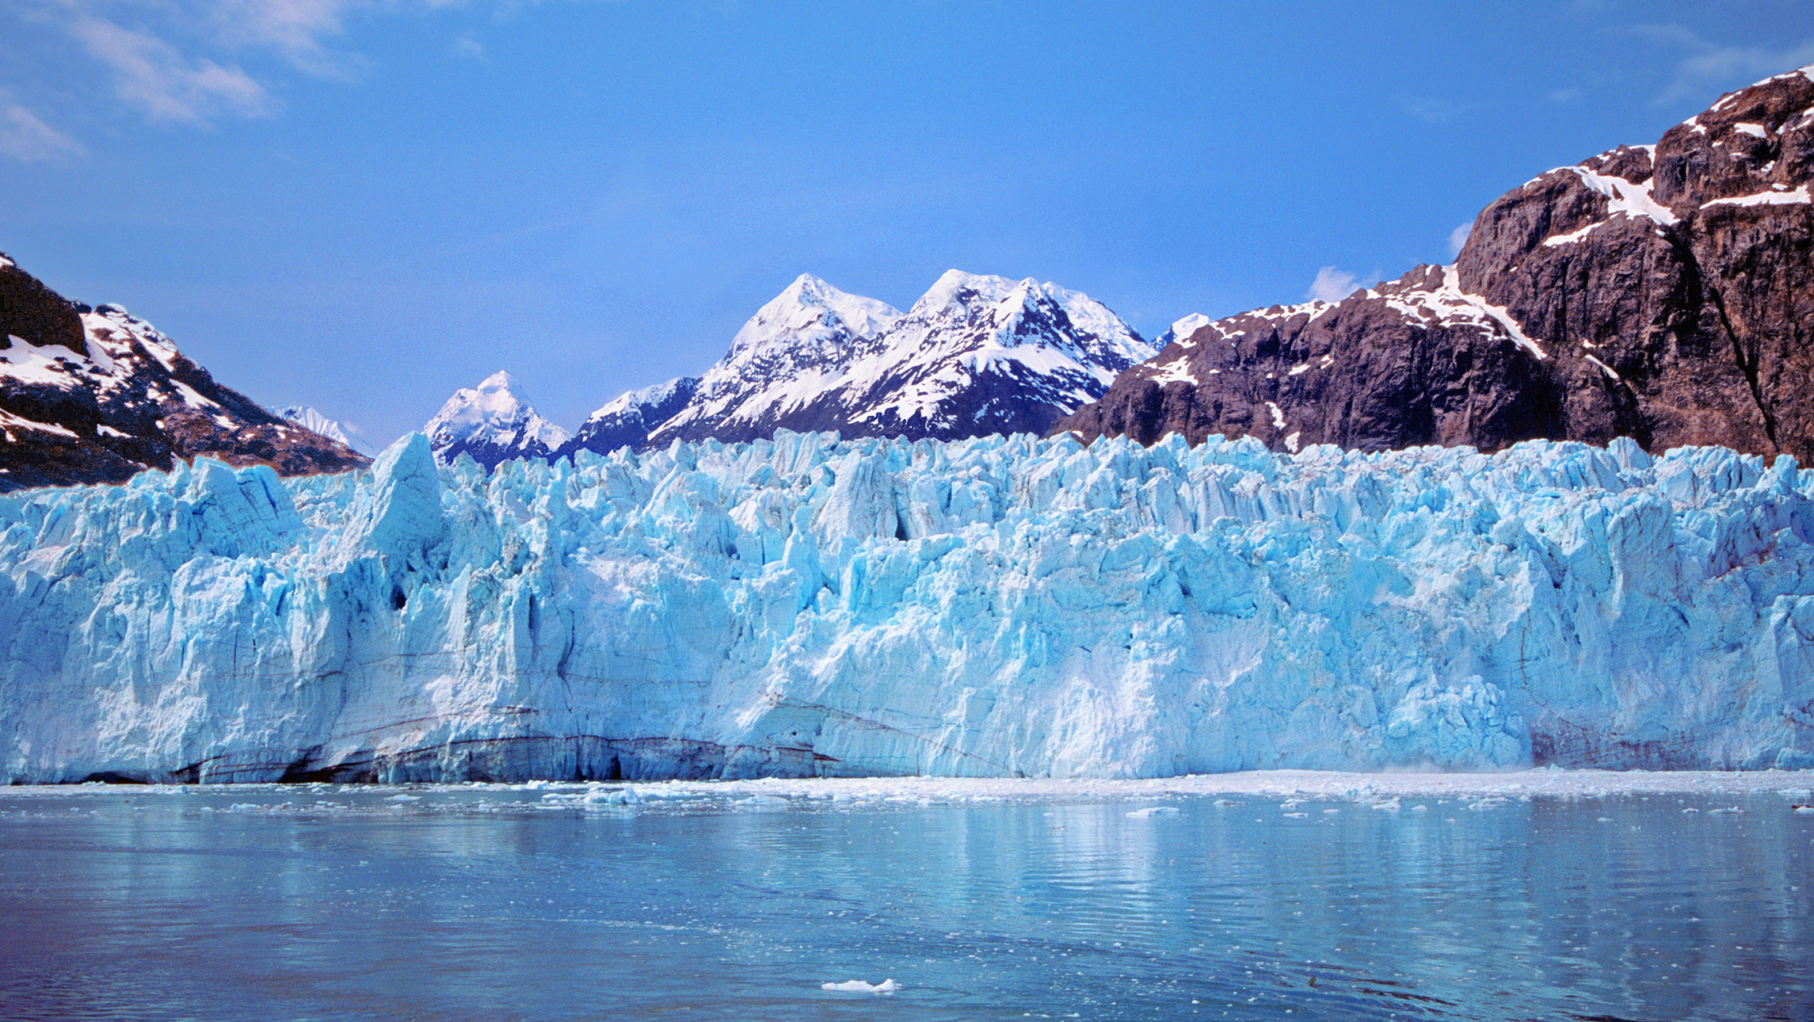 A glacier shelf in Alaska's Inside Passage